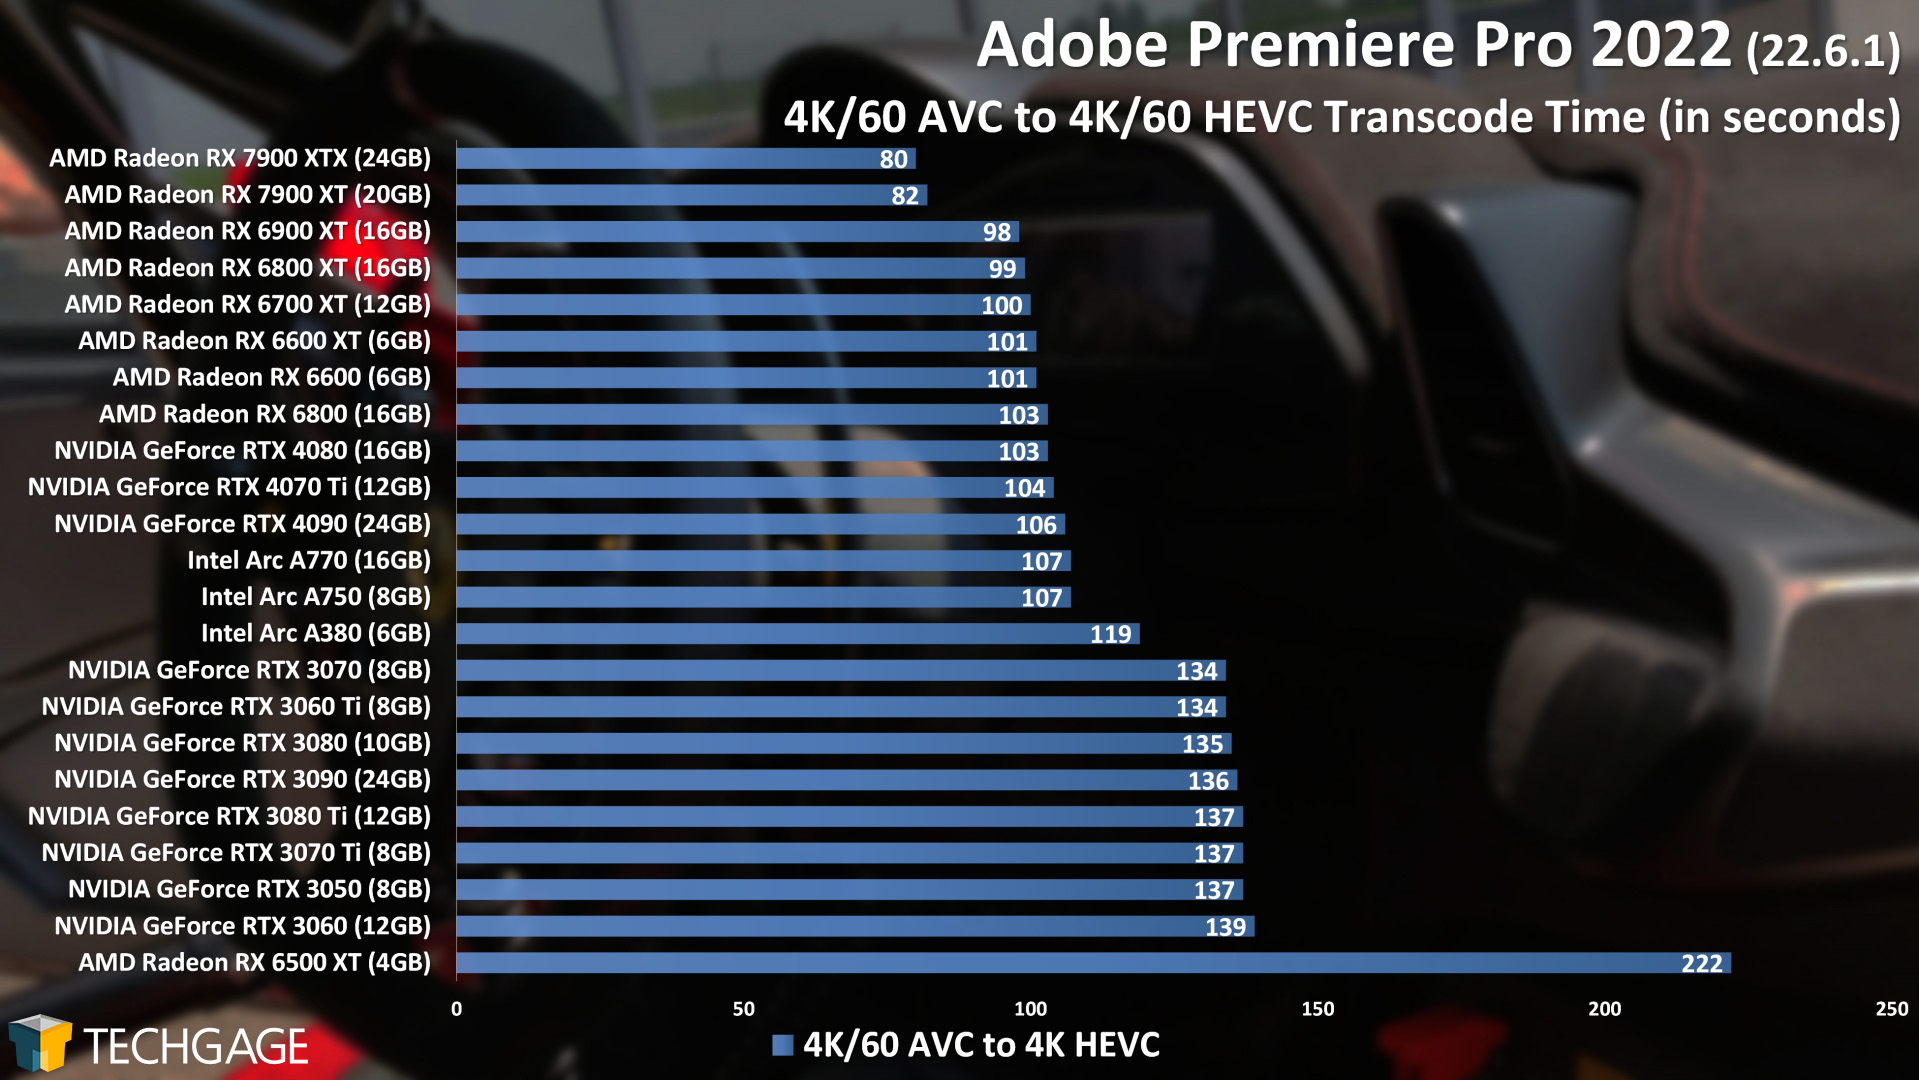 Adobe Premiere Pro - GPU Encoding Performance (4K60 AVC to HEVC)